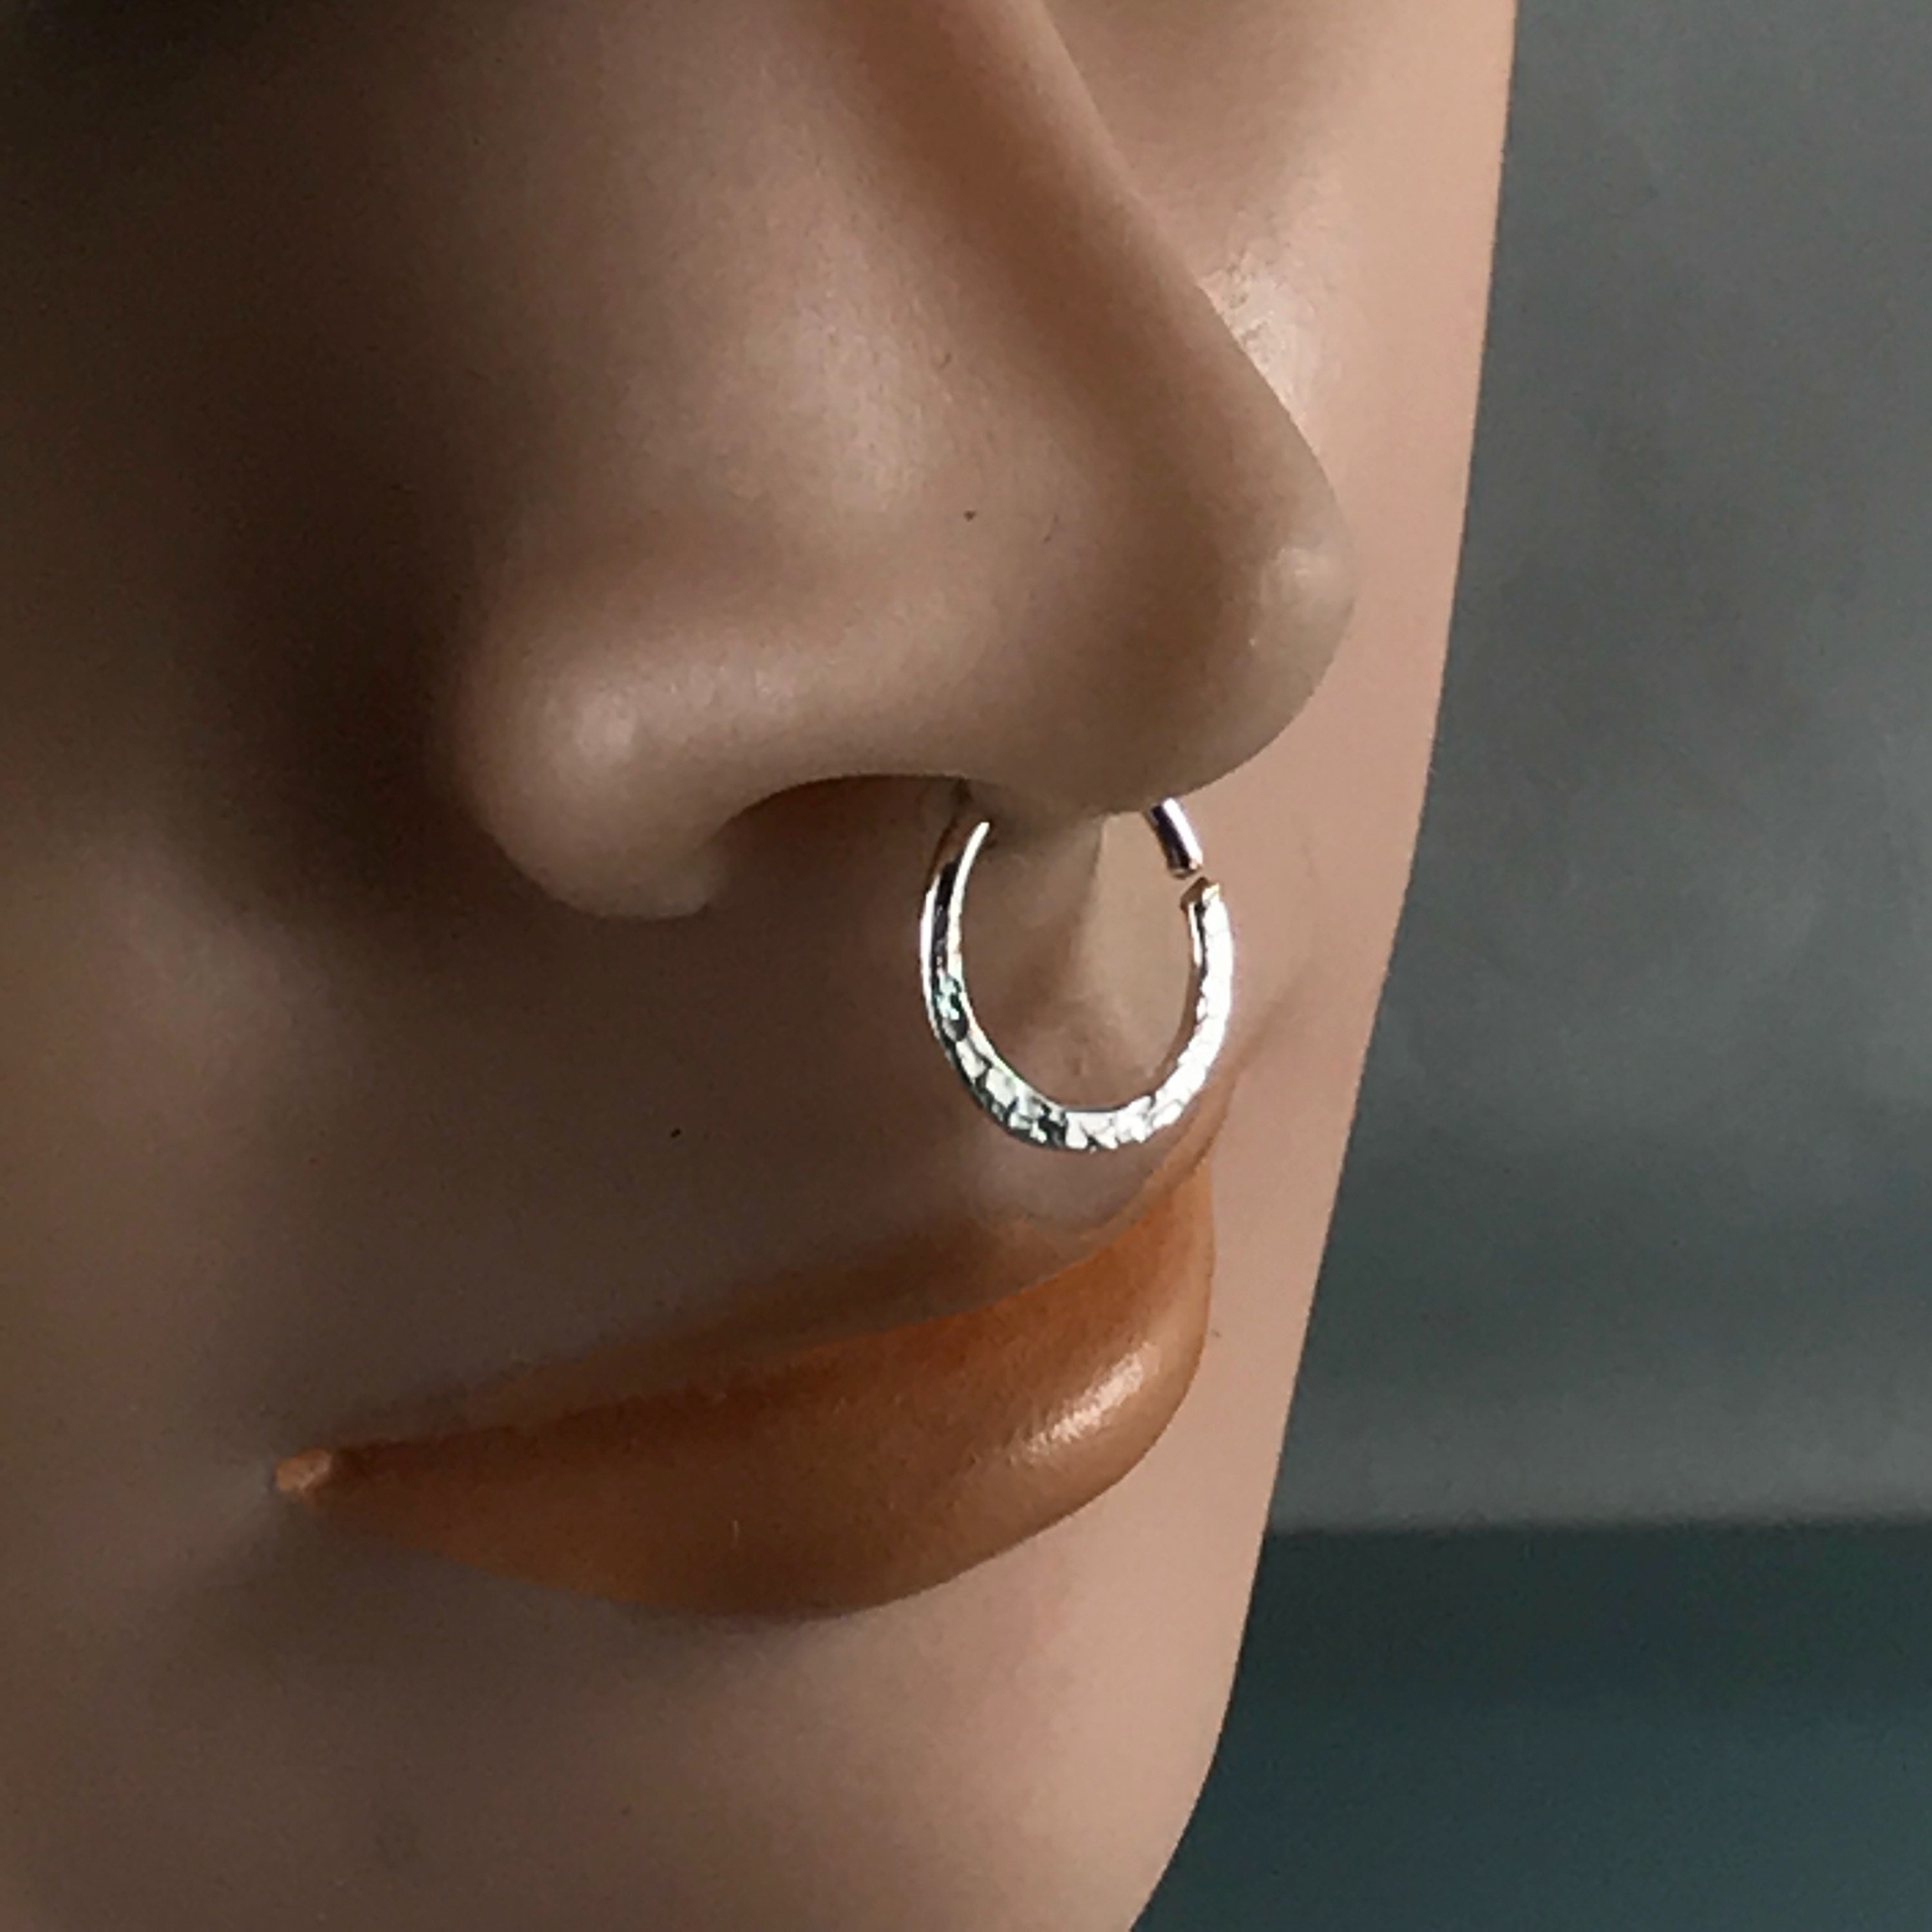 16g Septum Ring Septum Jewelry Septum Piercing Sterling Silver Septum Ring Niobium Nose